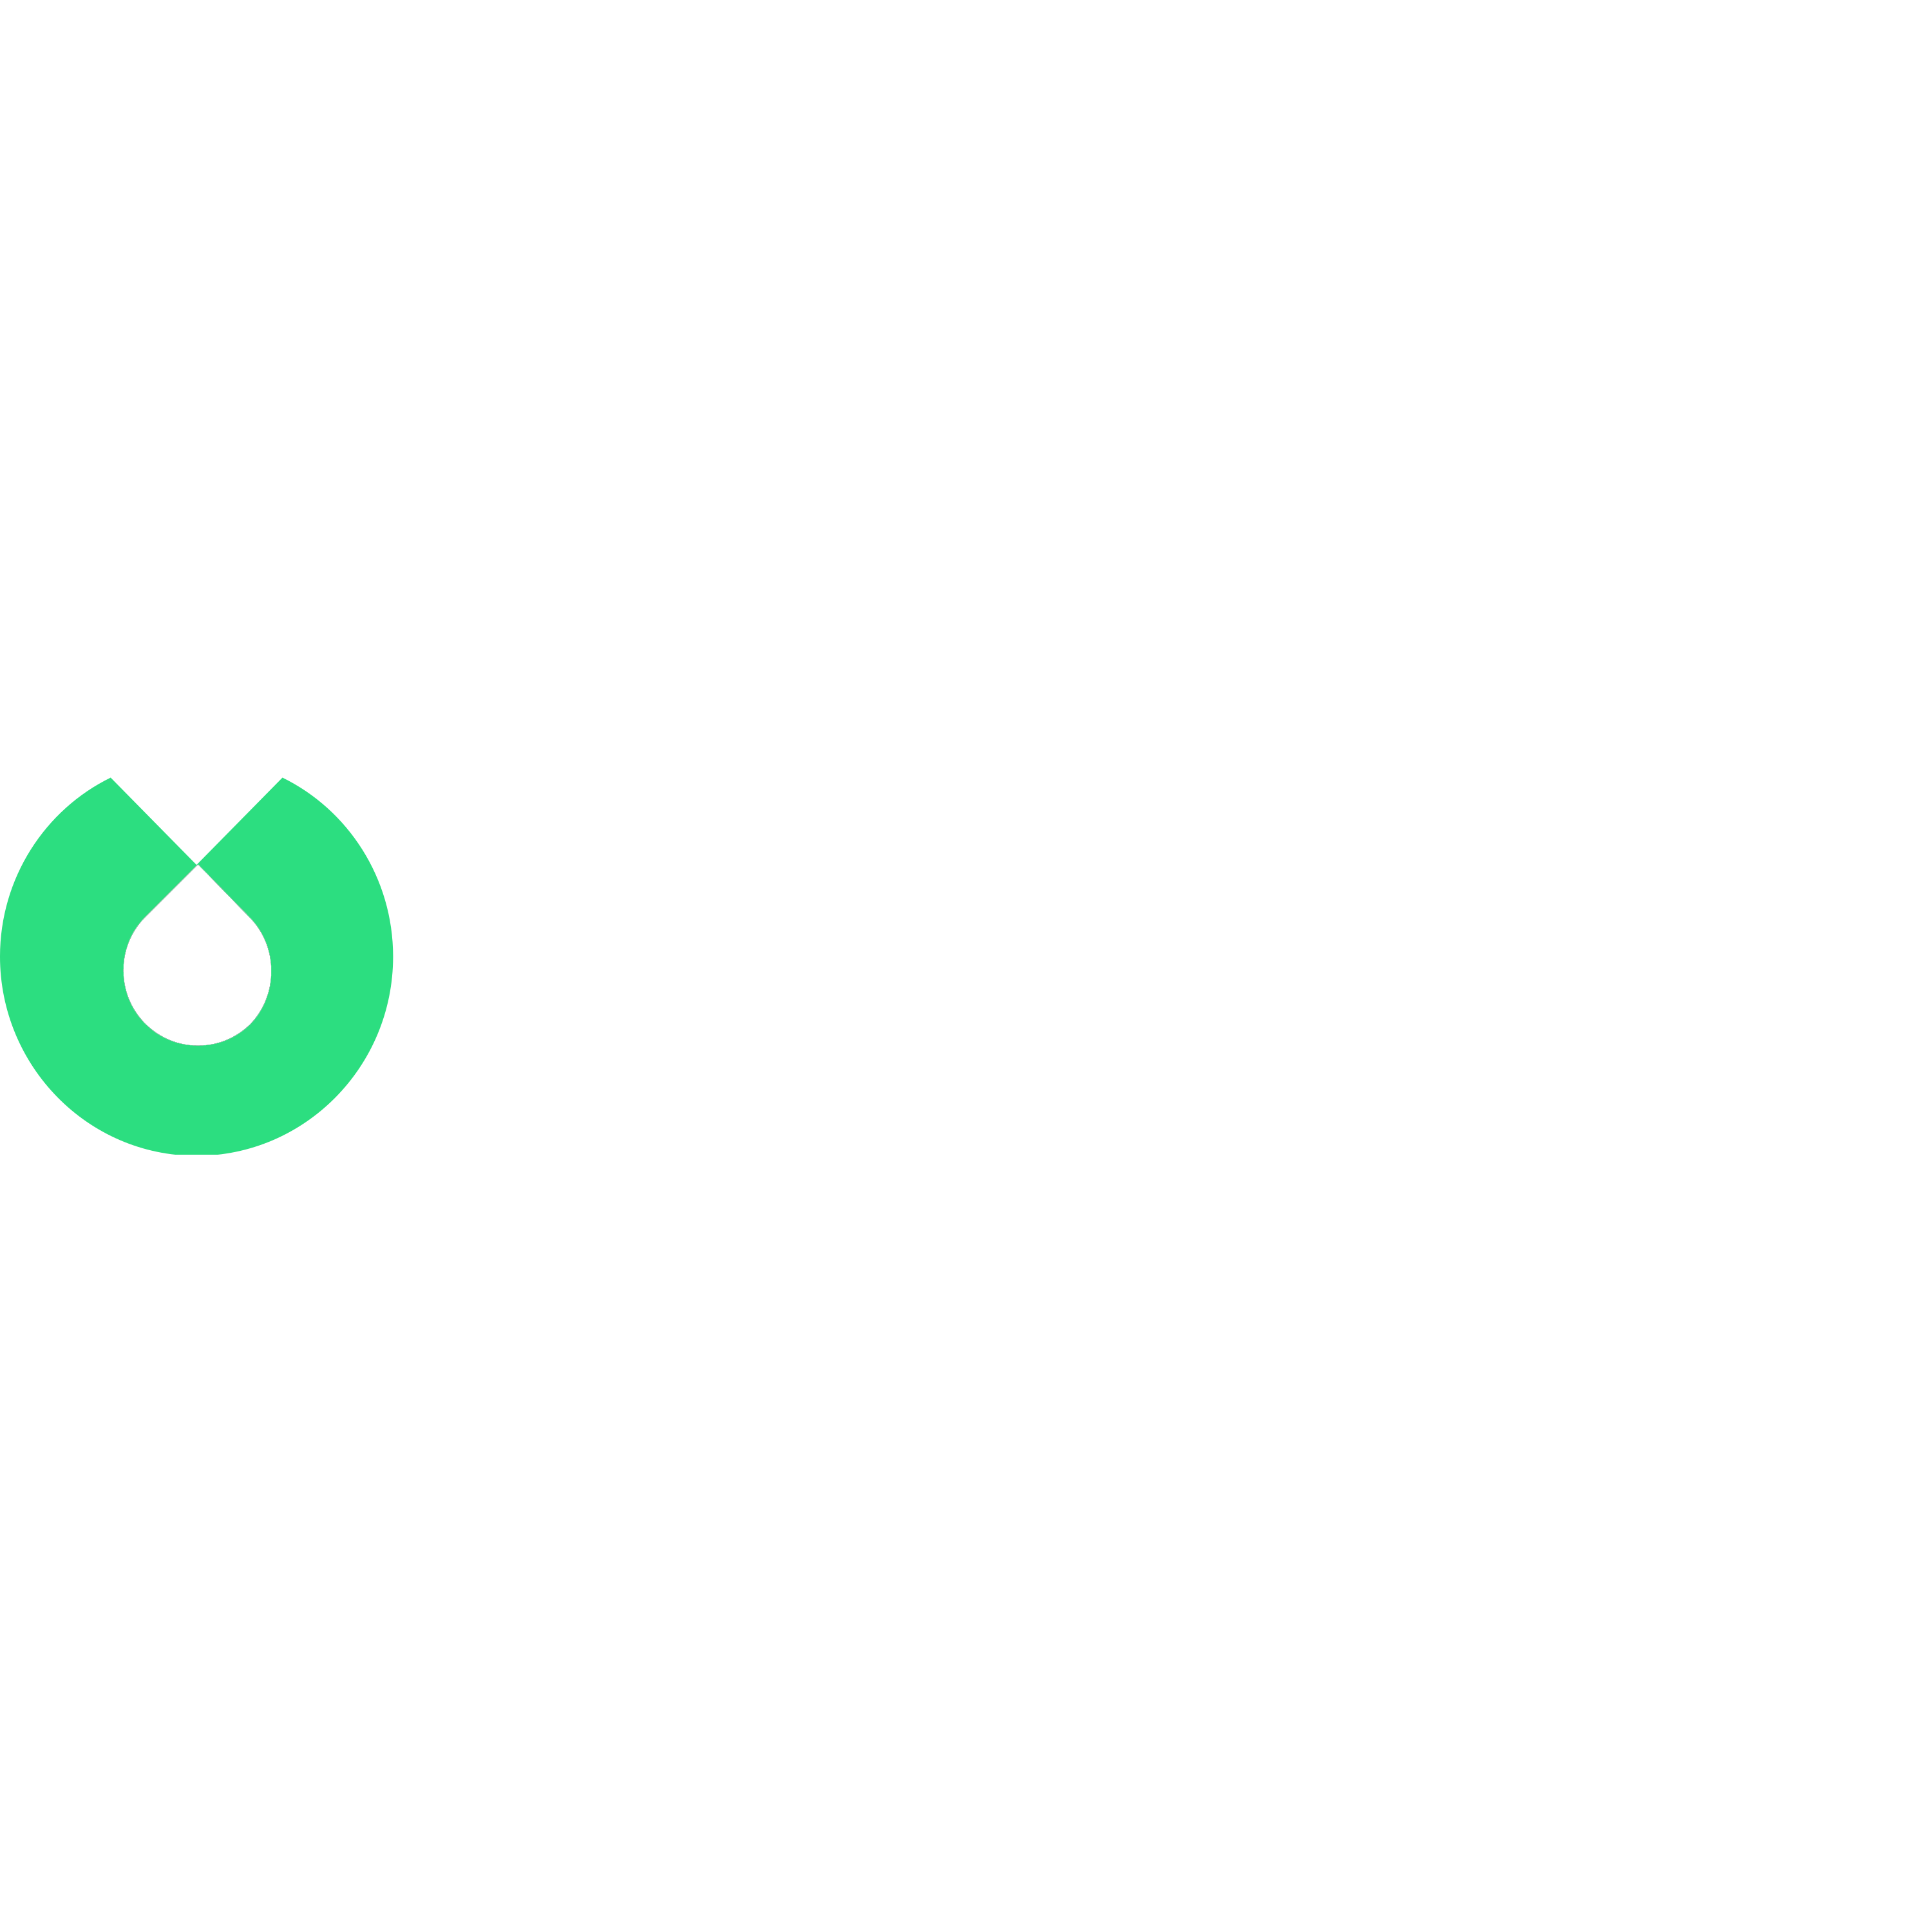 Blinklist Logo Transparent Picture